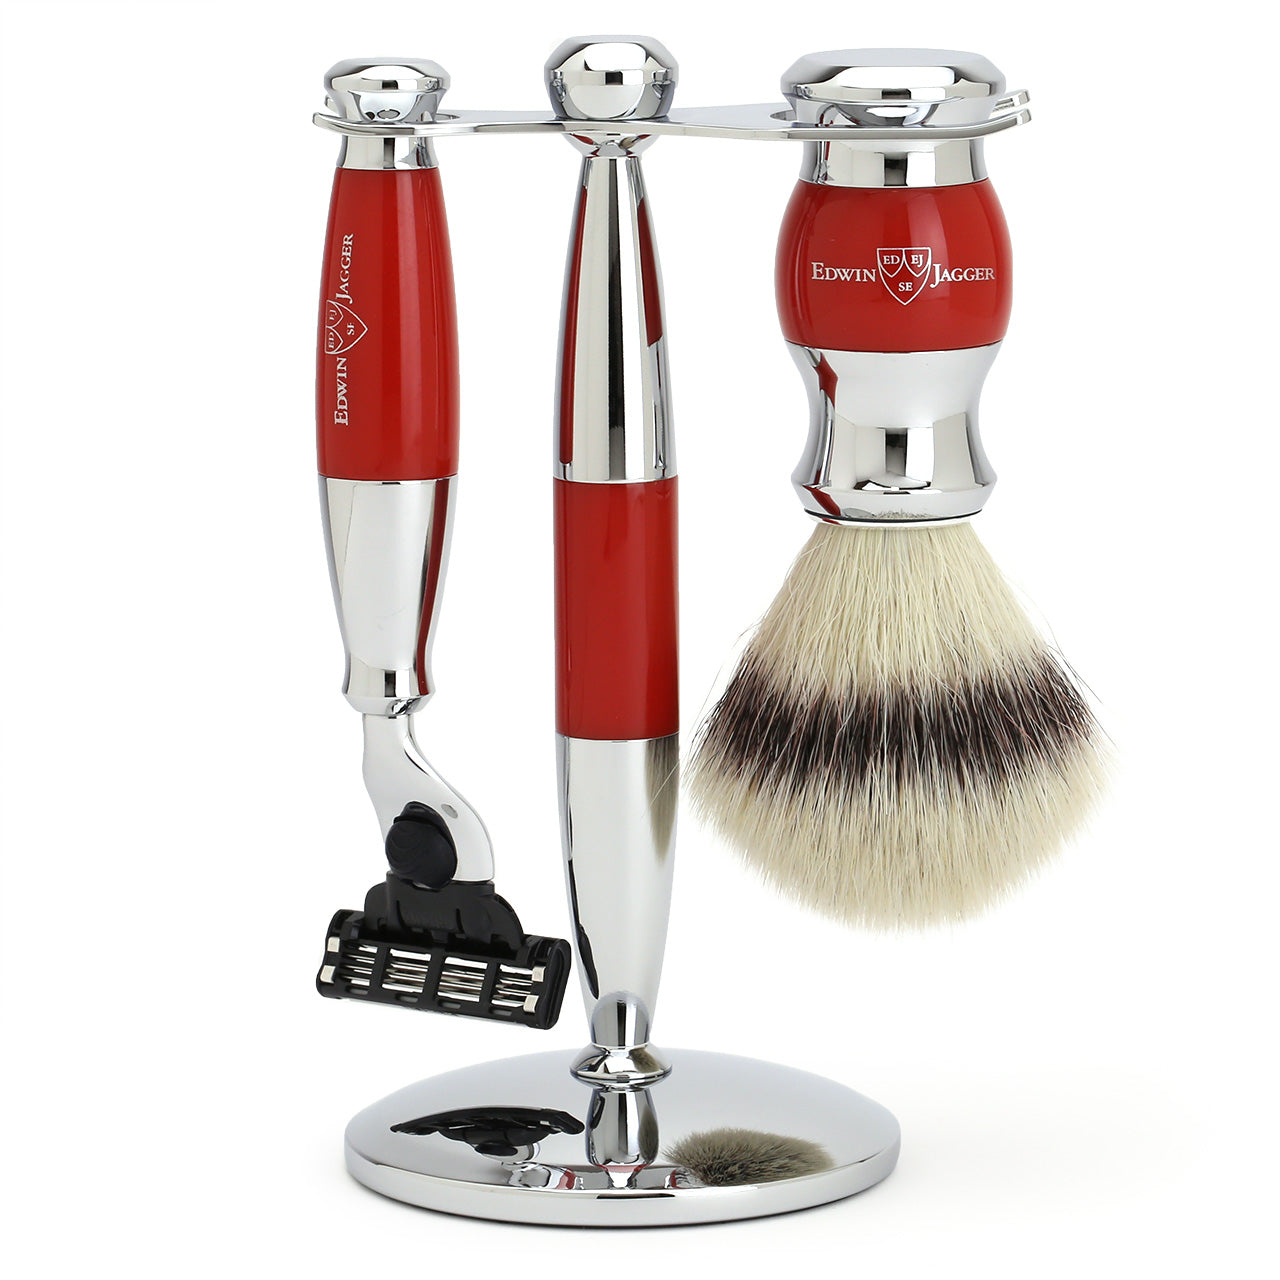 Edwin Jagger Shaving Set with Mach3 Razor, Shaving Brush & Stand - Red